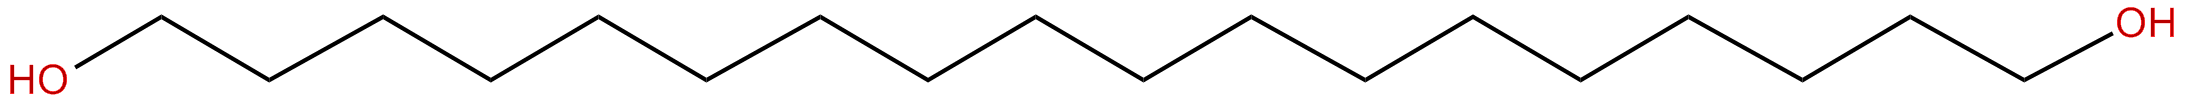 Image of 1,18-octadecanediol